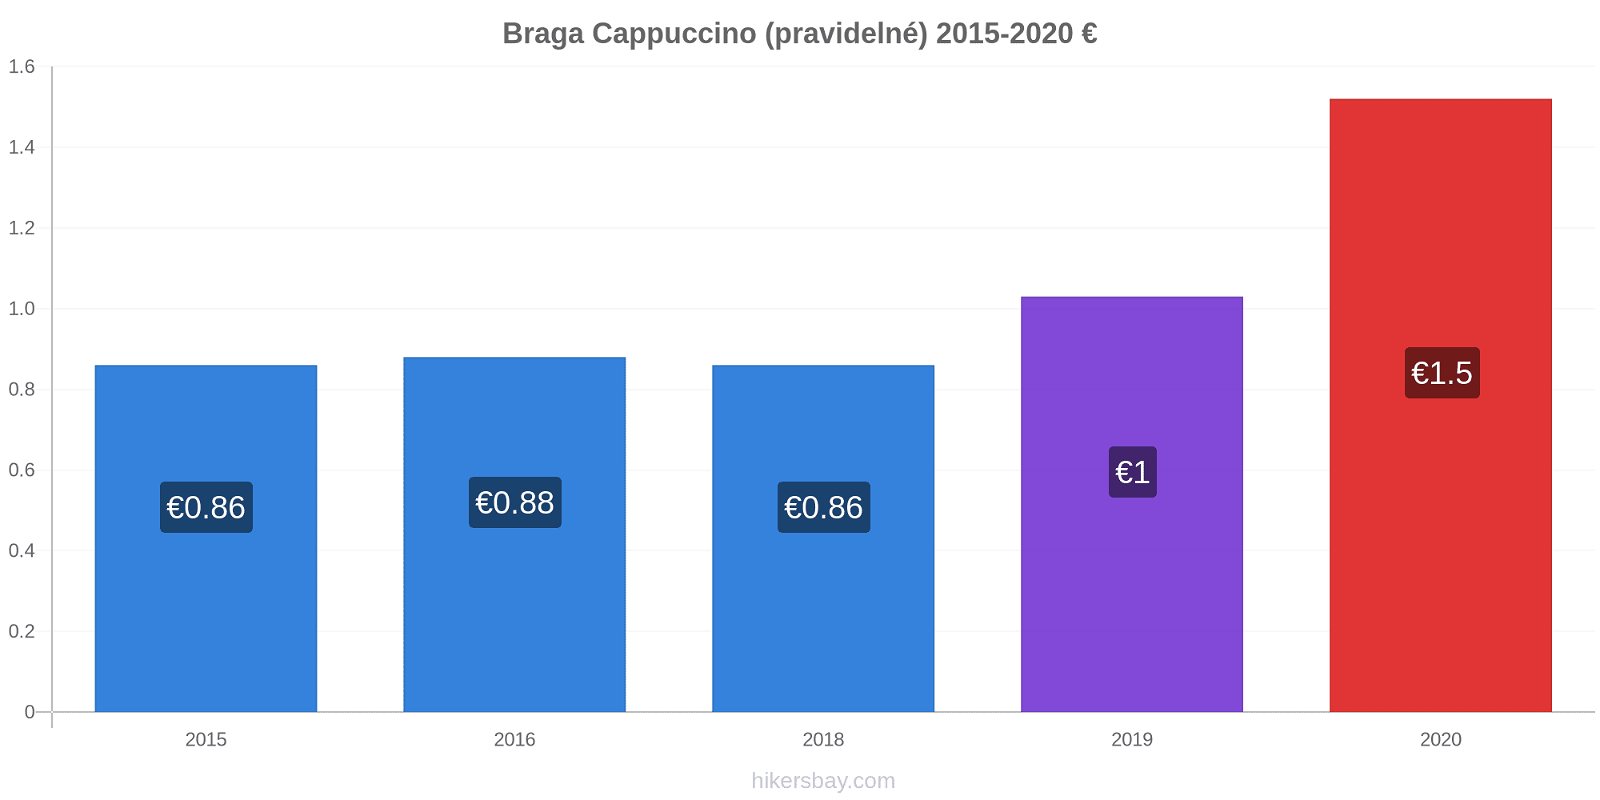 Braga změny cen Cappuccino (pravidelné) hikersbay.com